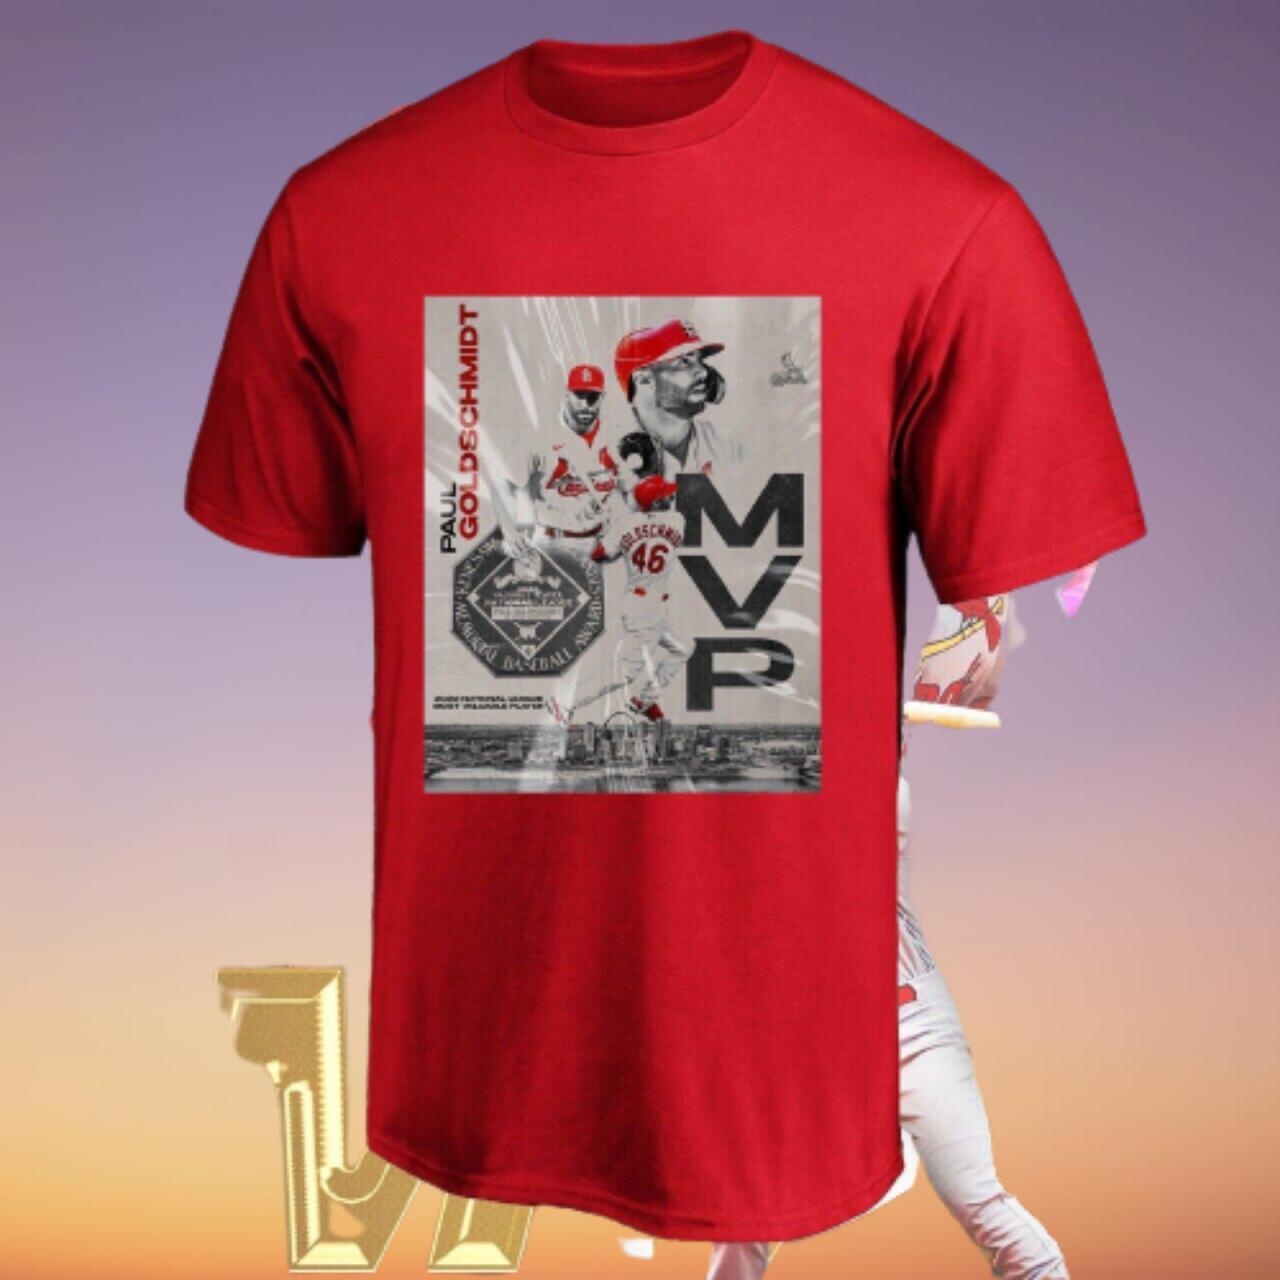 St. Louis Cardinals T-Shirt - Gift for Her - St-Louis Shirt Gift